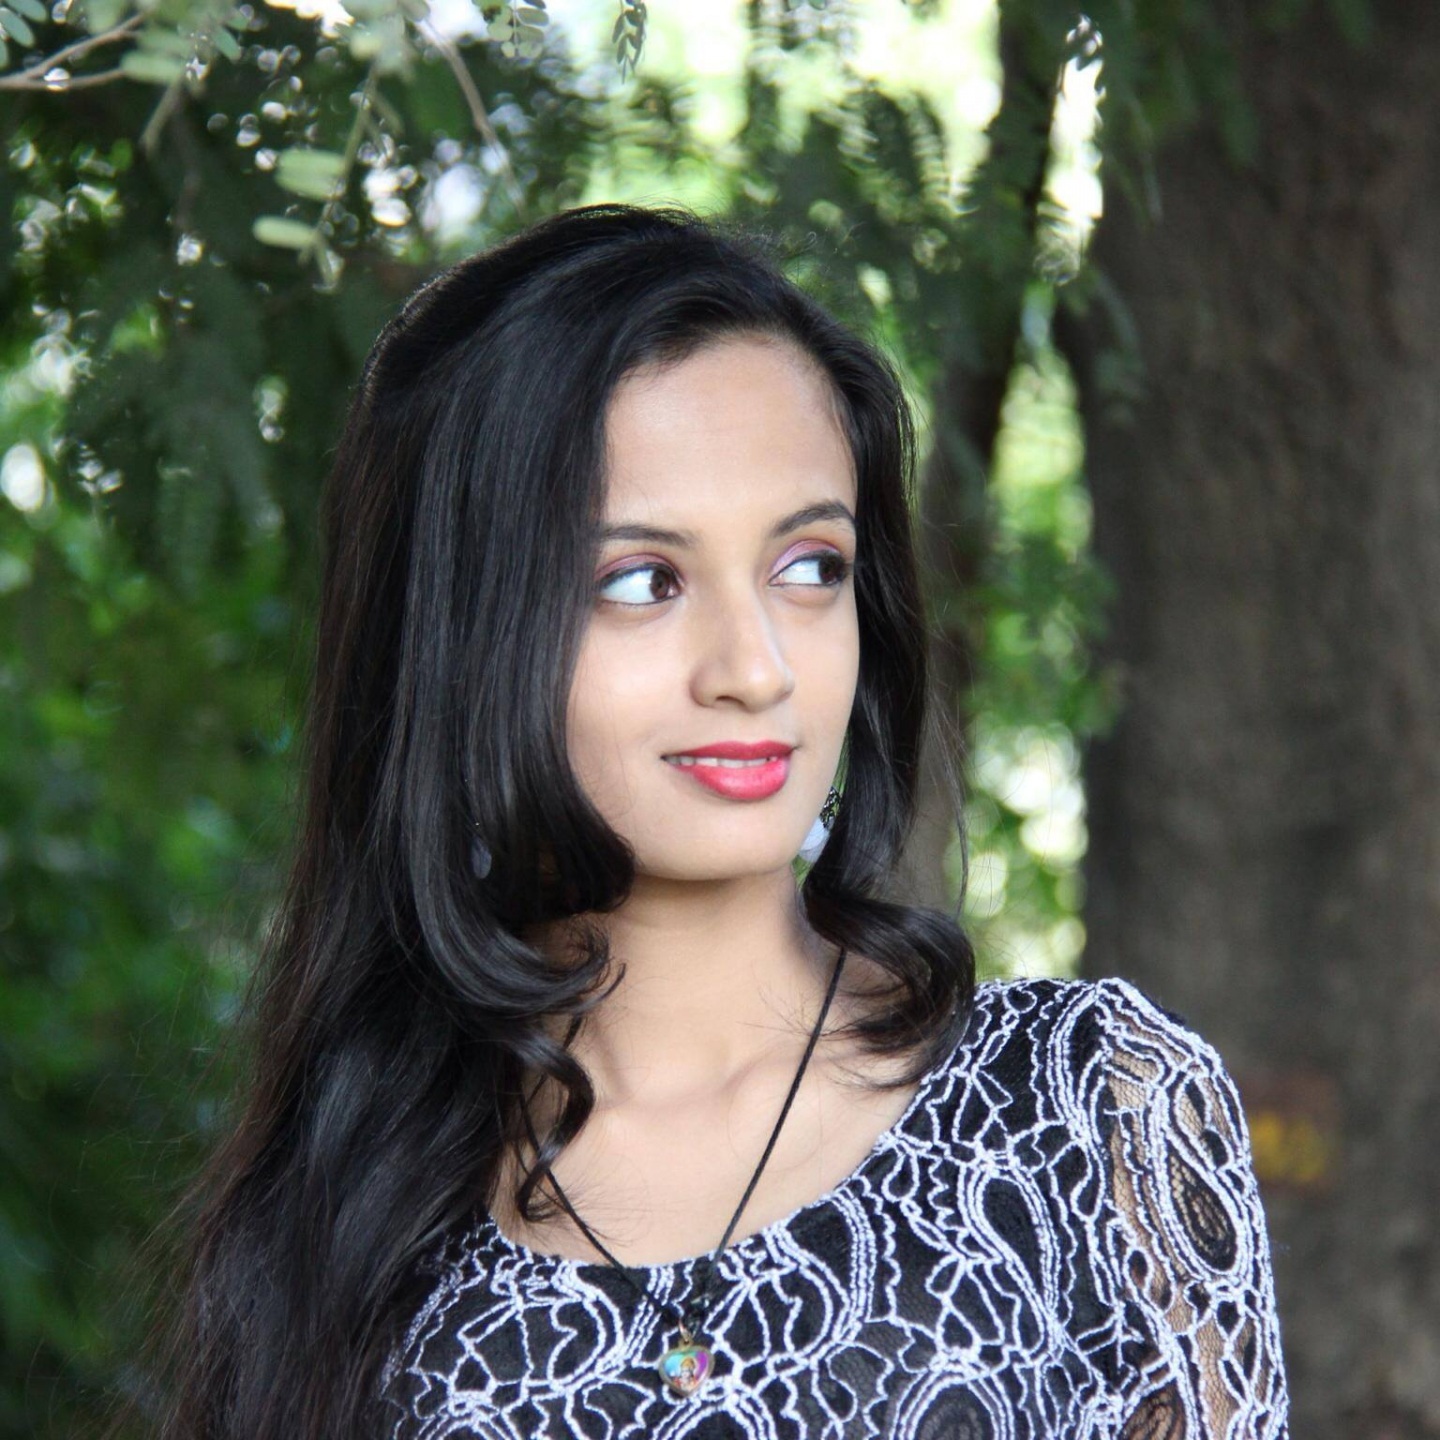 Ketaki Mategaonkar Marathi Actress Fondos De Pantallas Im Genes